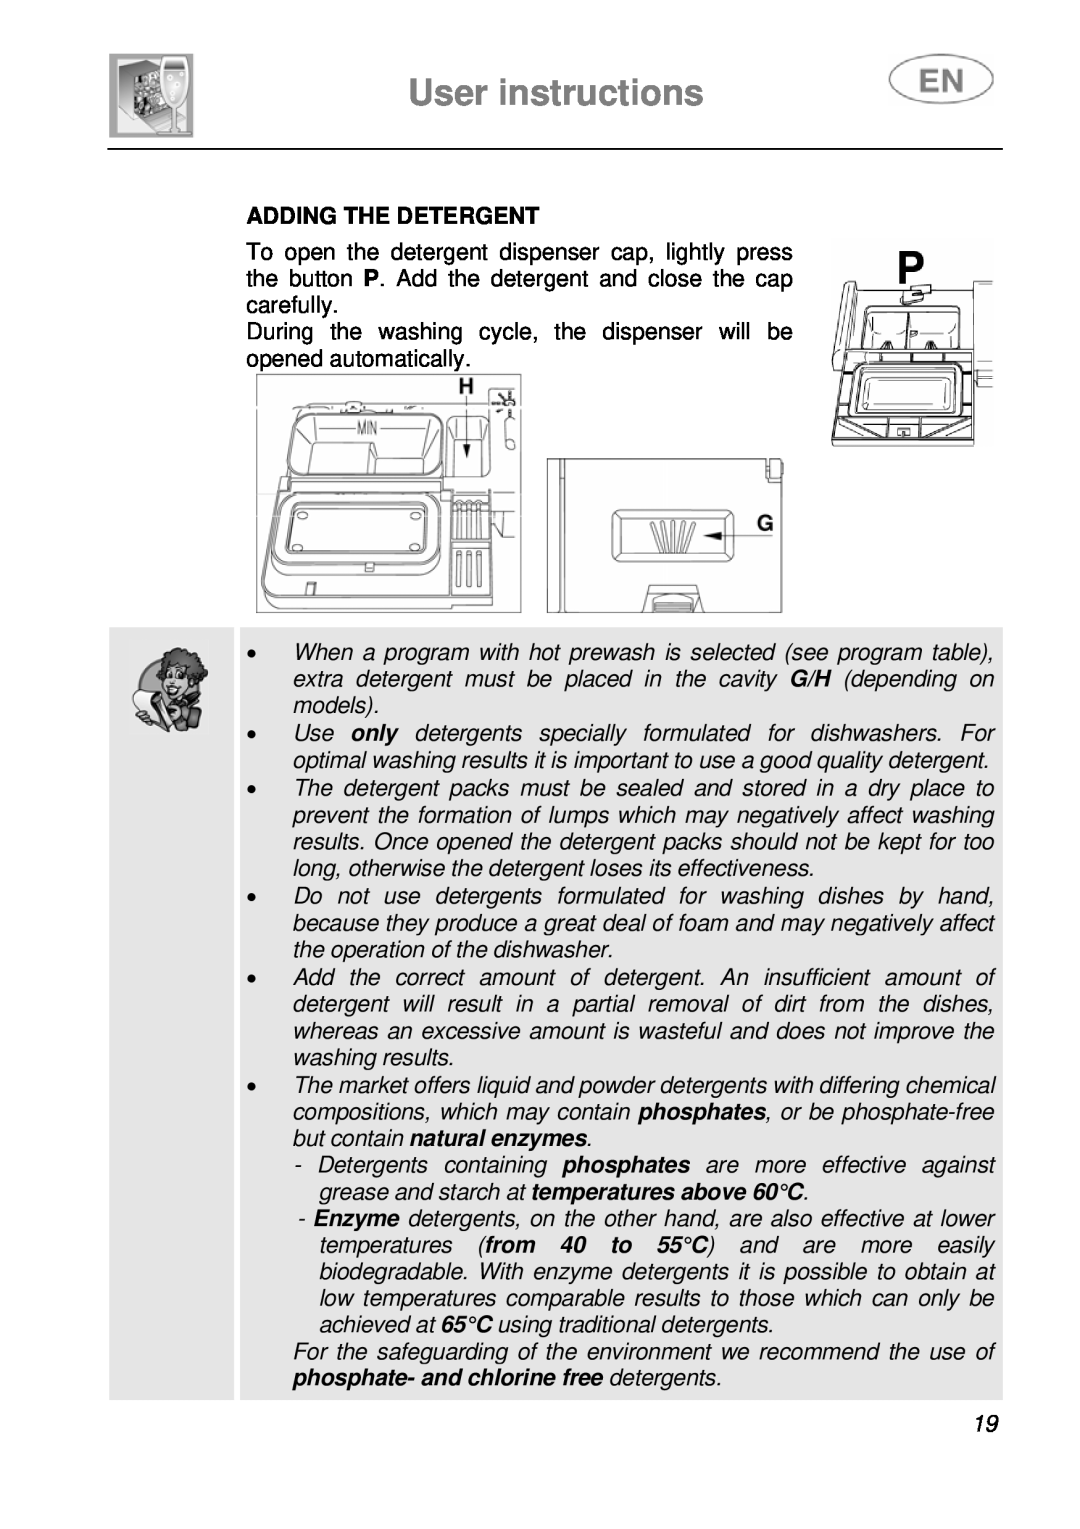 Smeg STA6245, STA6246 instruction manual User instructions, Adding The Detergent 